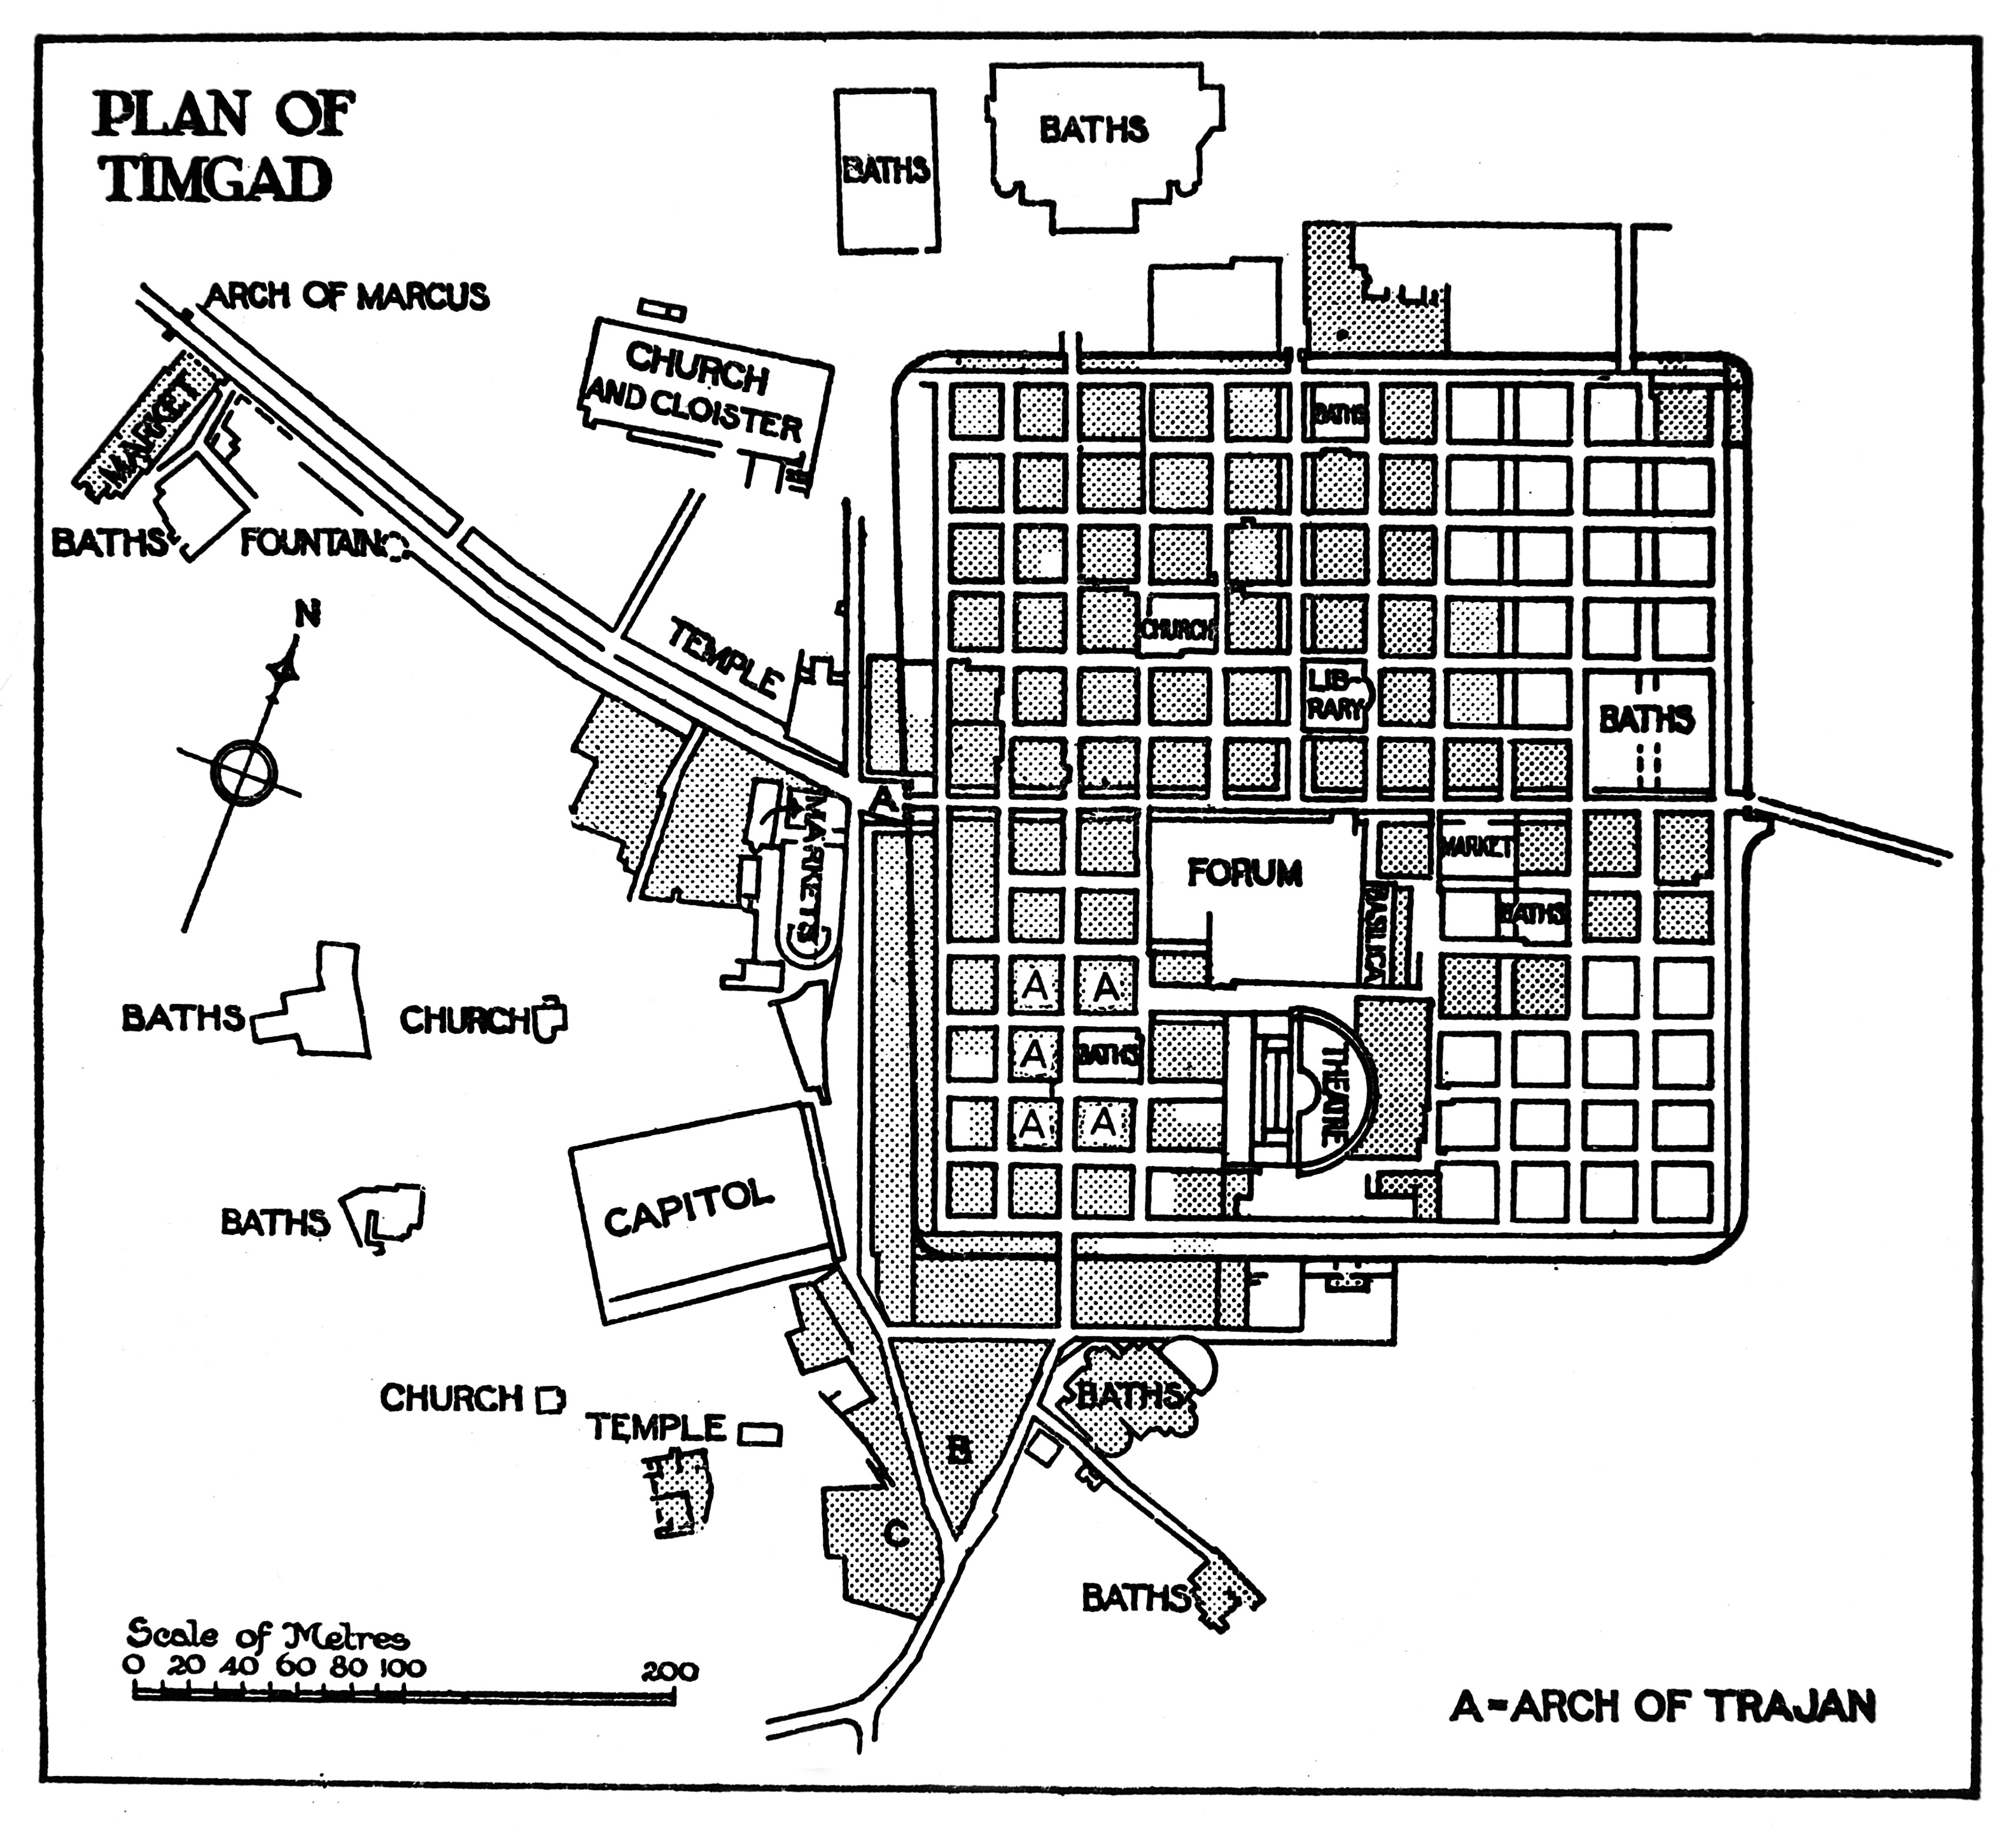 Plan of Timgad